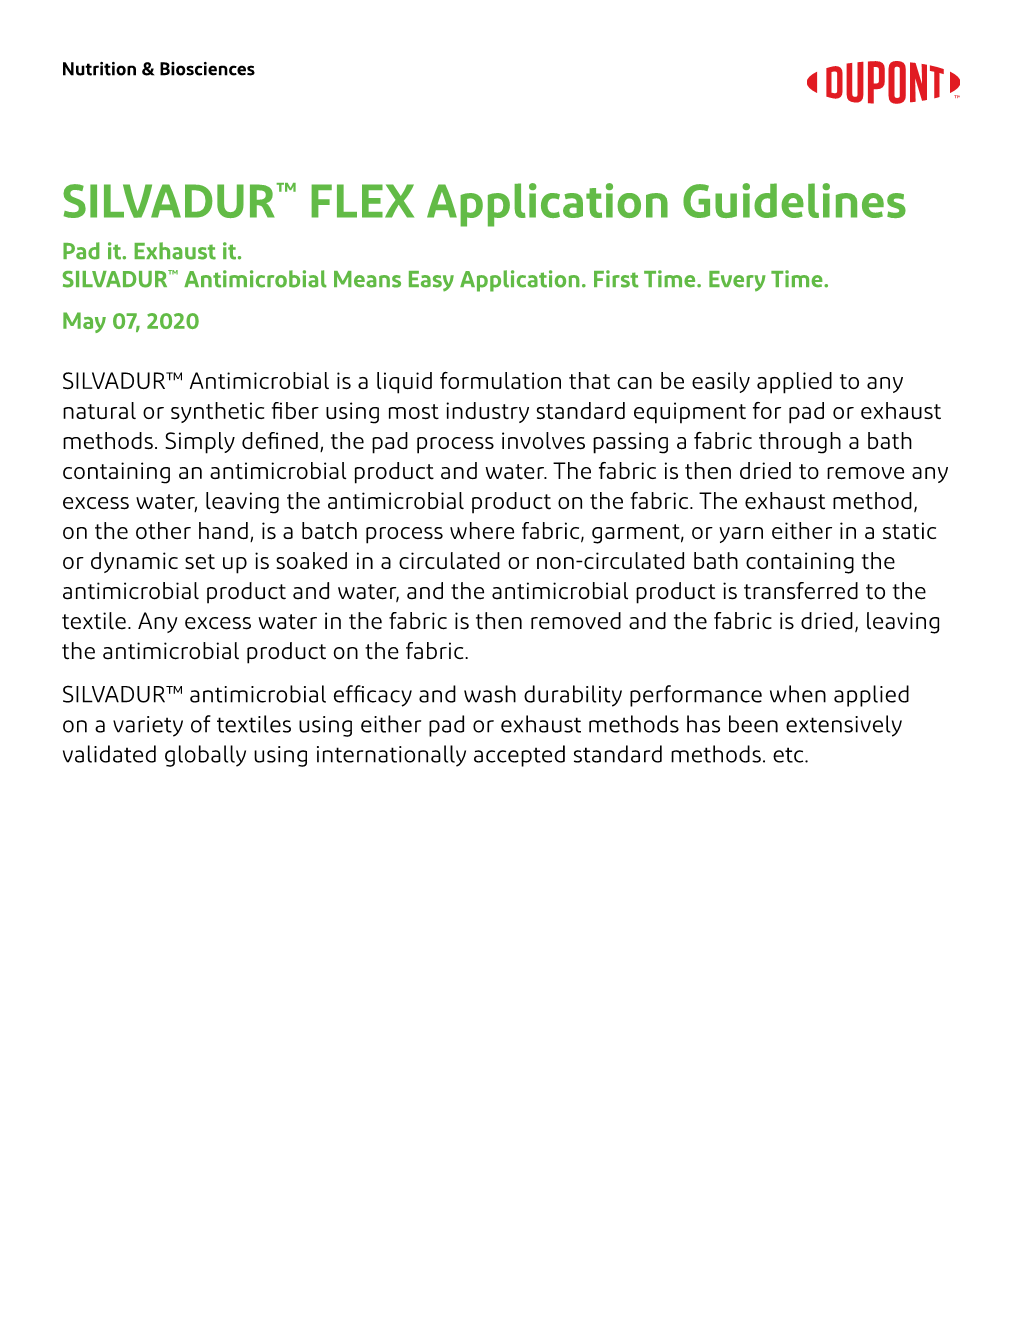 SILVADUR™ Application Guidelines